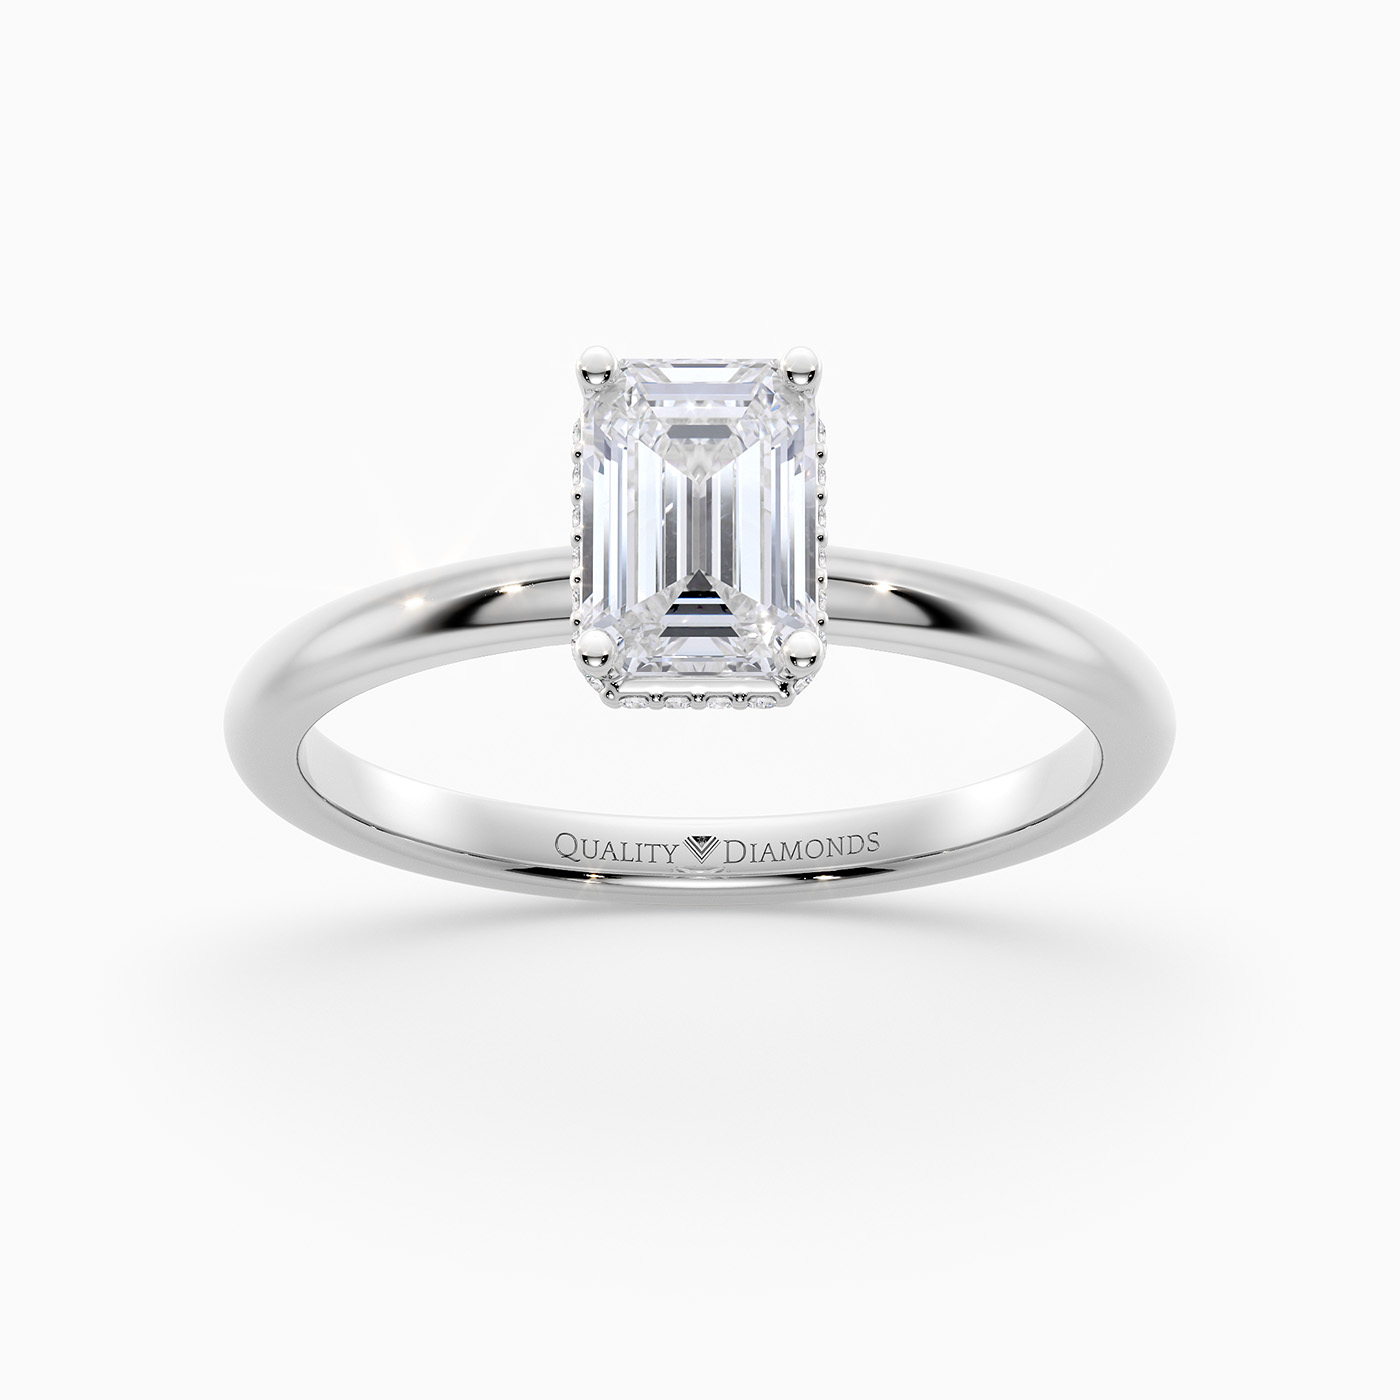 Emerald Liraz Hidden Halo Diamond Ring in Platinum 950